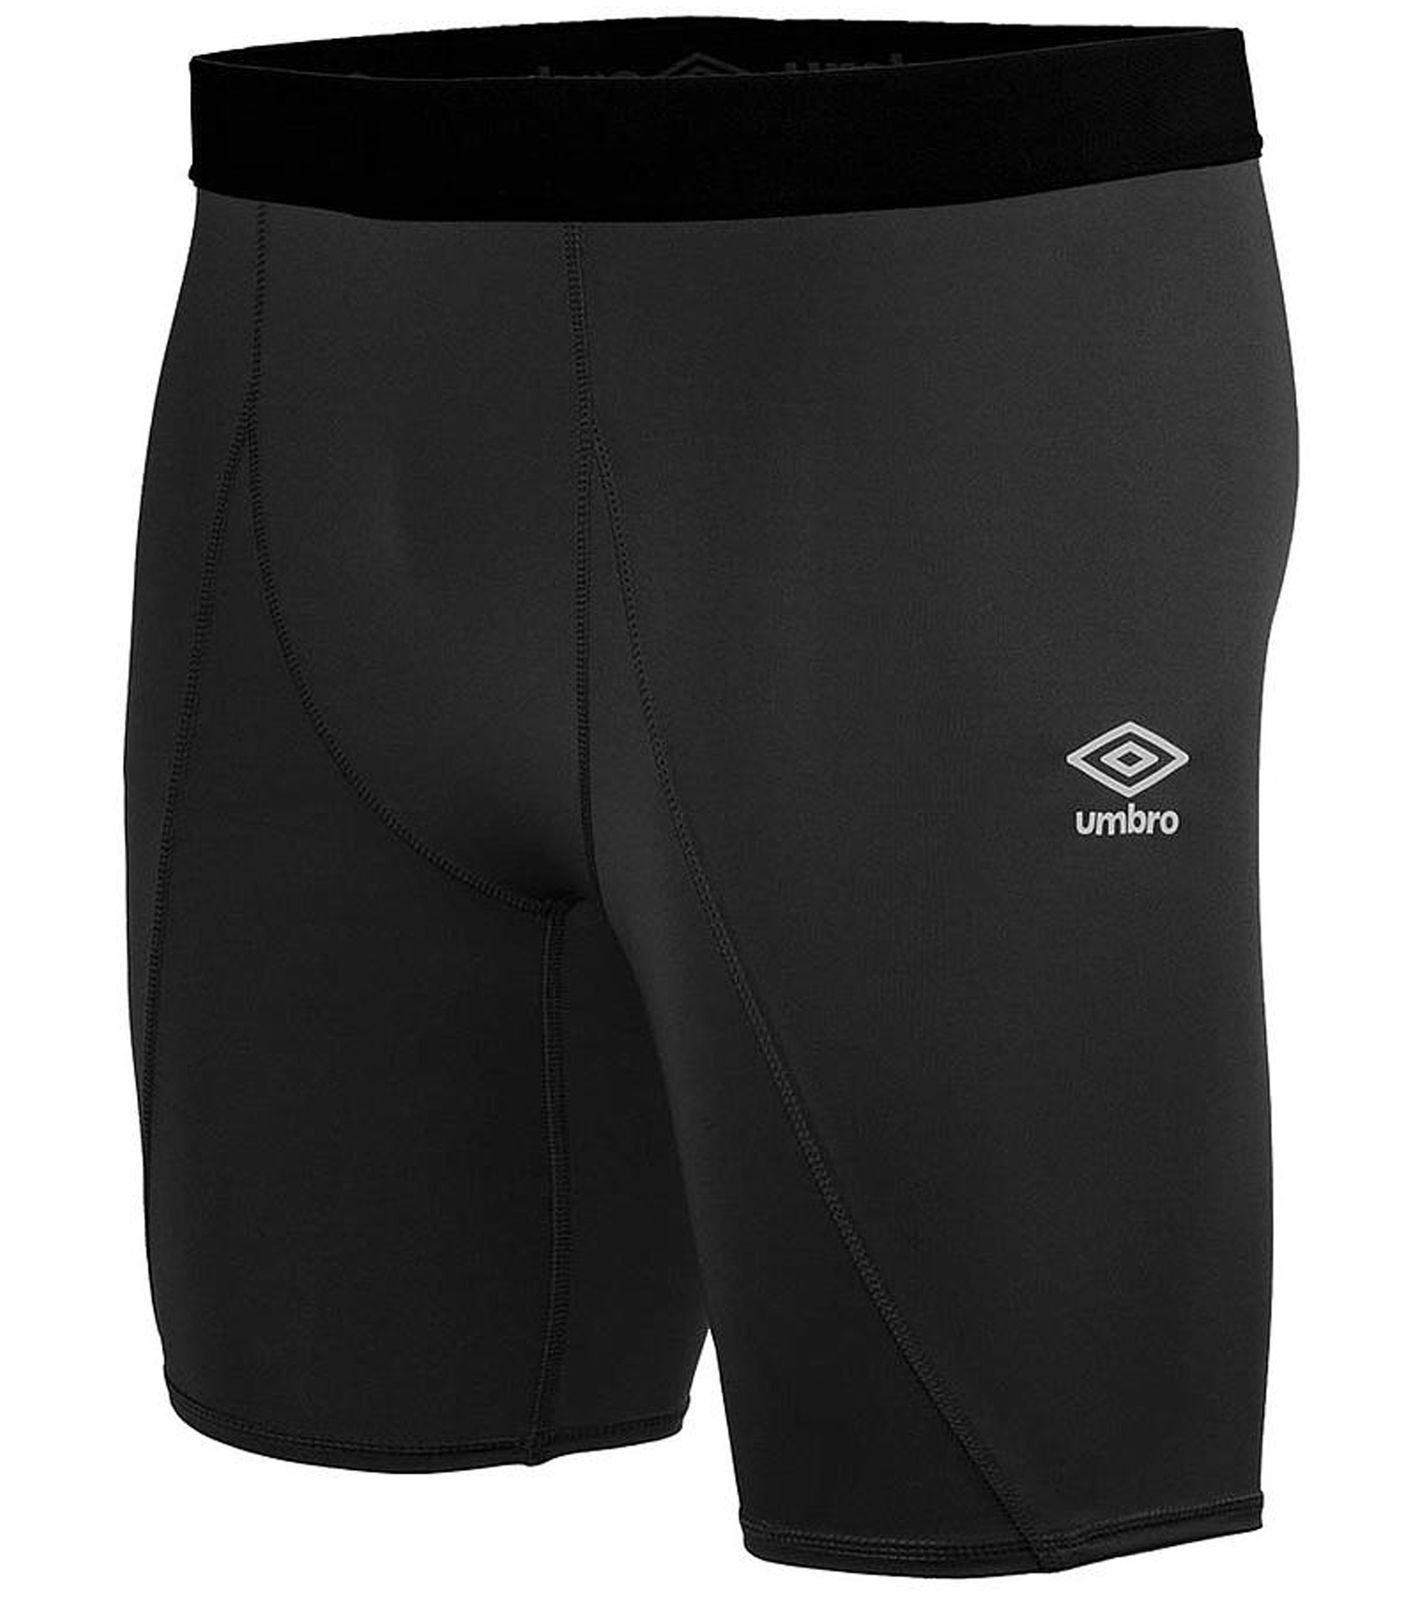 Umbro Shorts Power Funktions-Hose Core 64704U-060 umbro Short Rad-Hose Schwarz Herren kurze Sport-Shorts